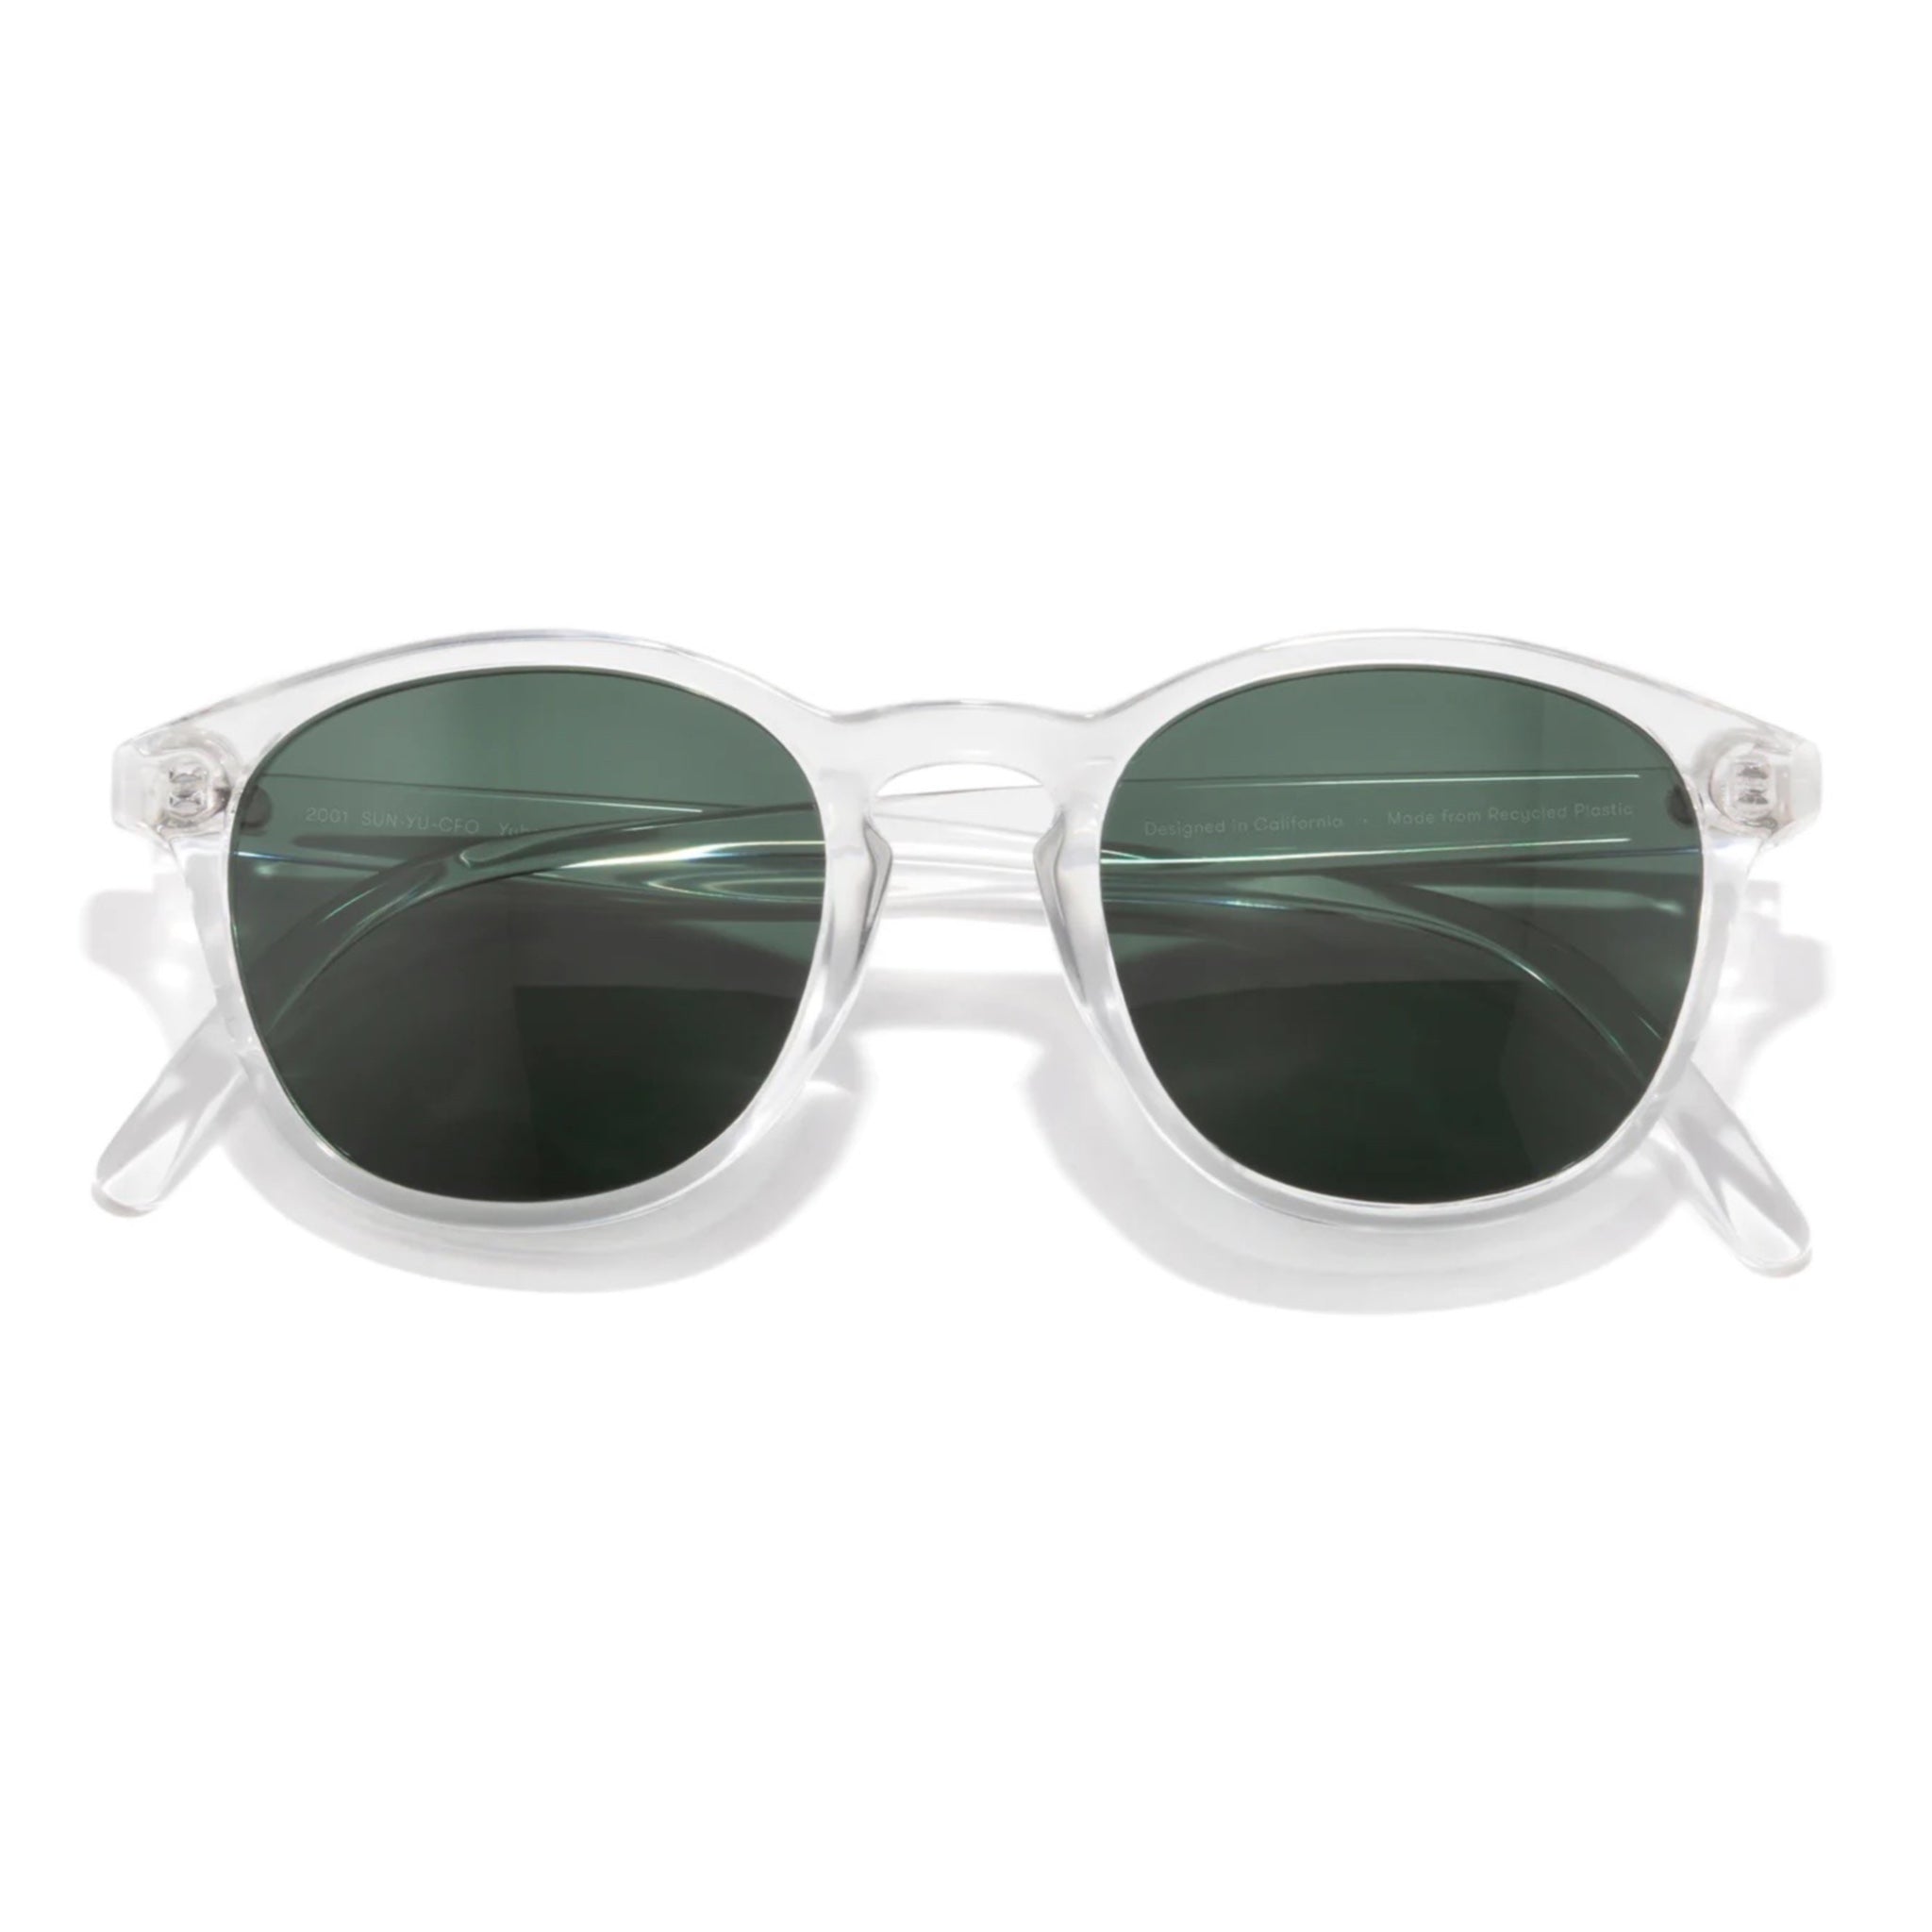 Sunski Yuba Polarised Sunglasses - Clear Forest